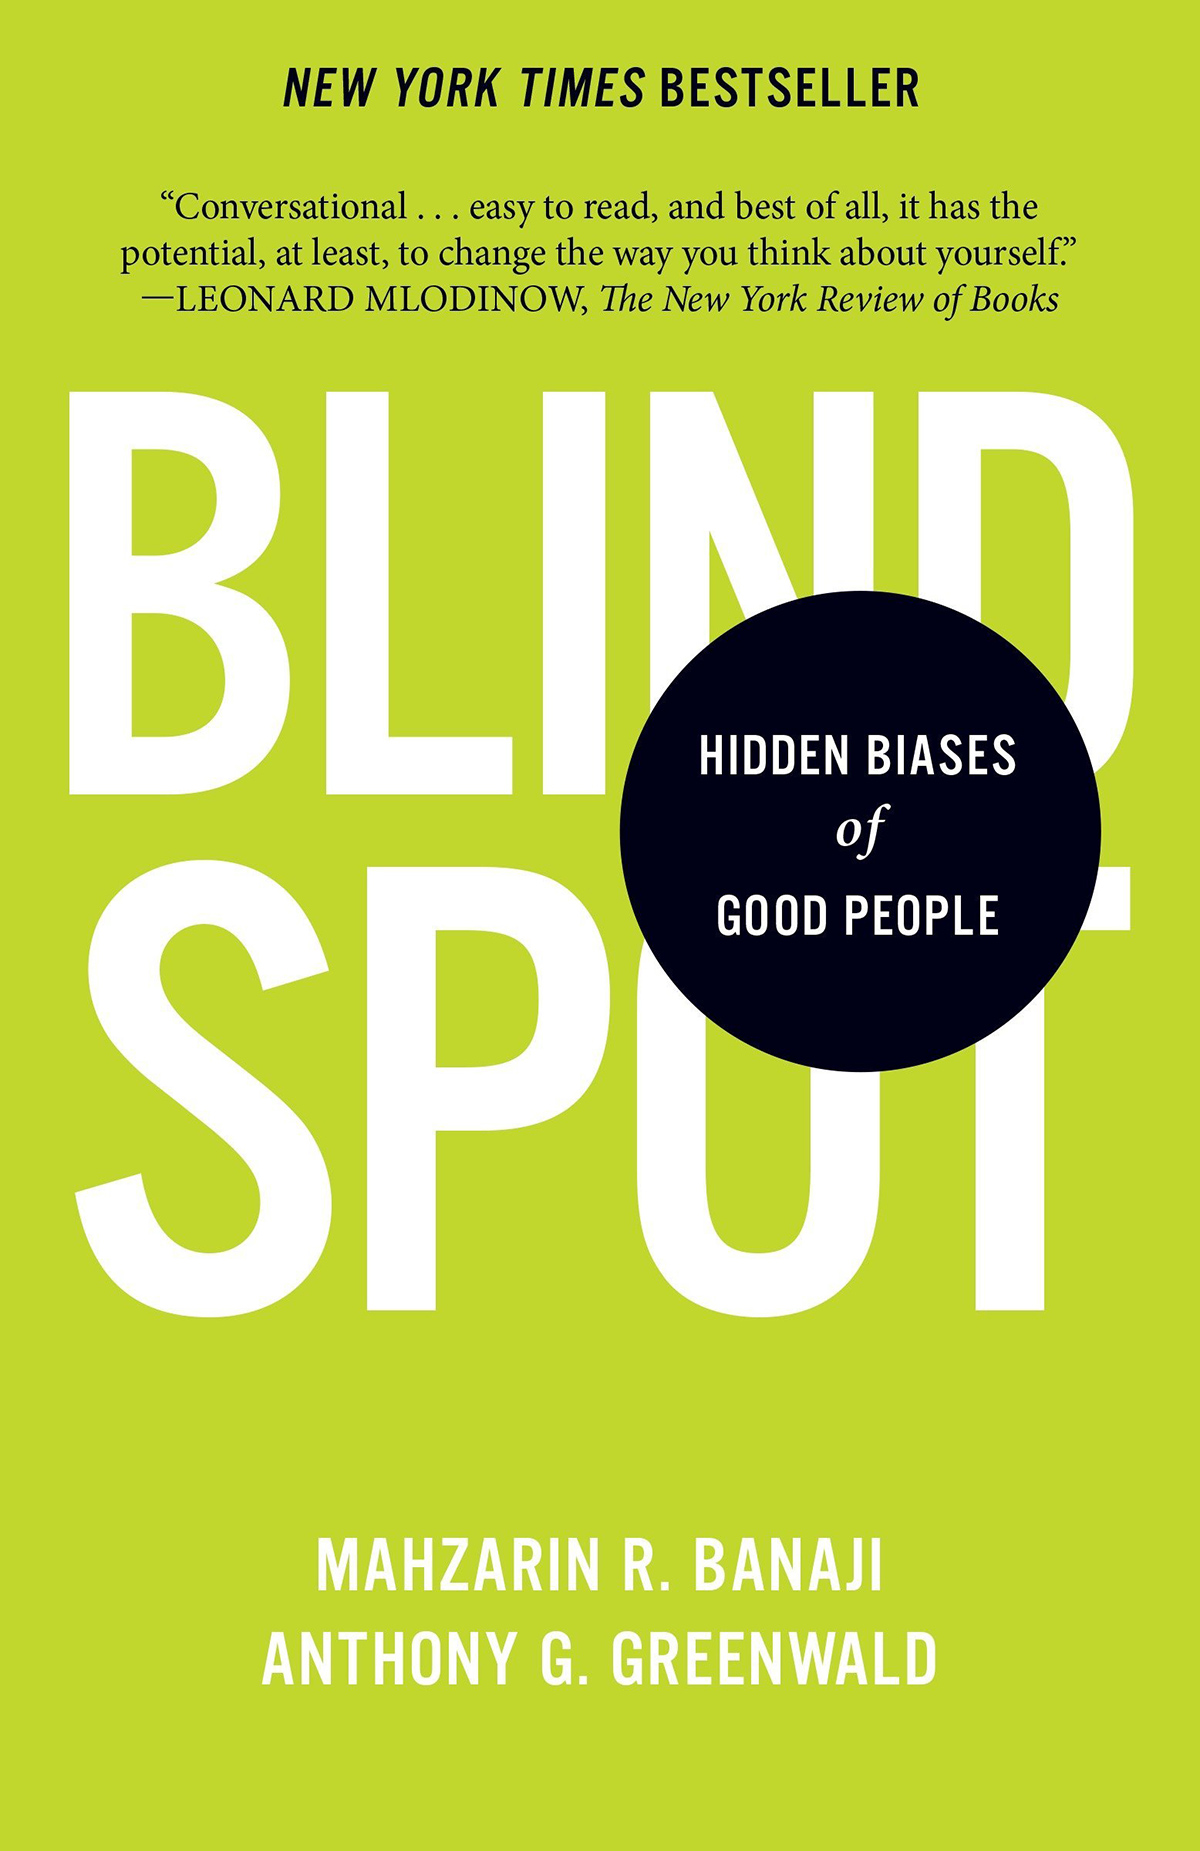 Blindspot: Hidden Biases of Good People by Mahzarin Banaji and Anthony Greenwald